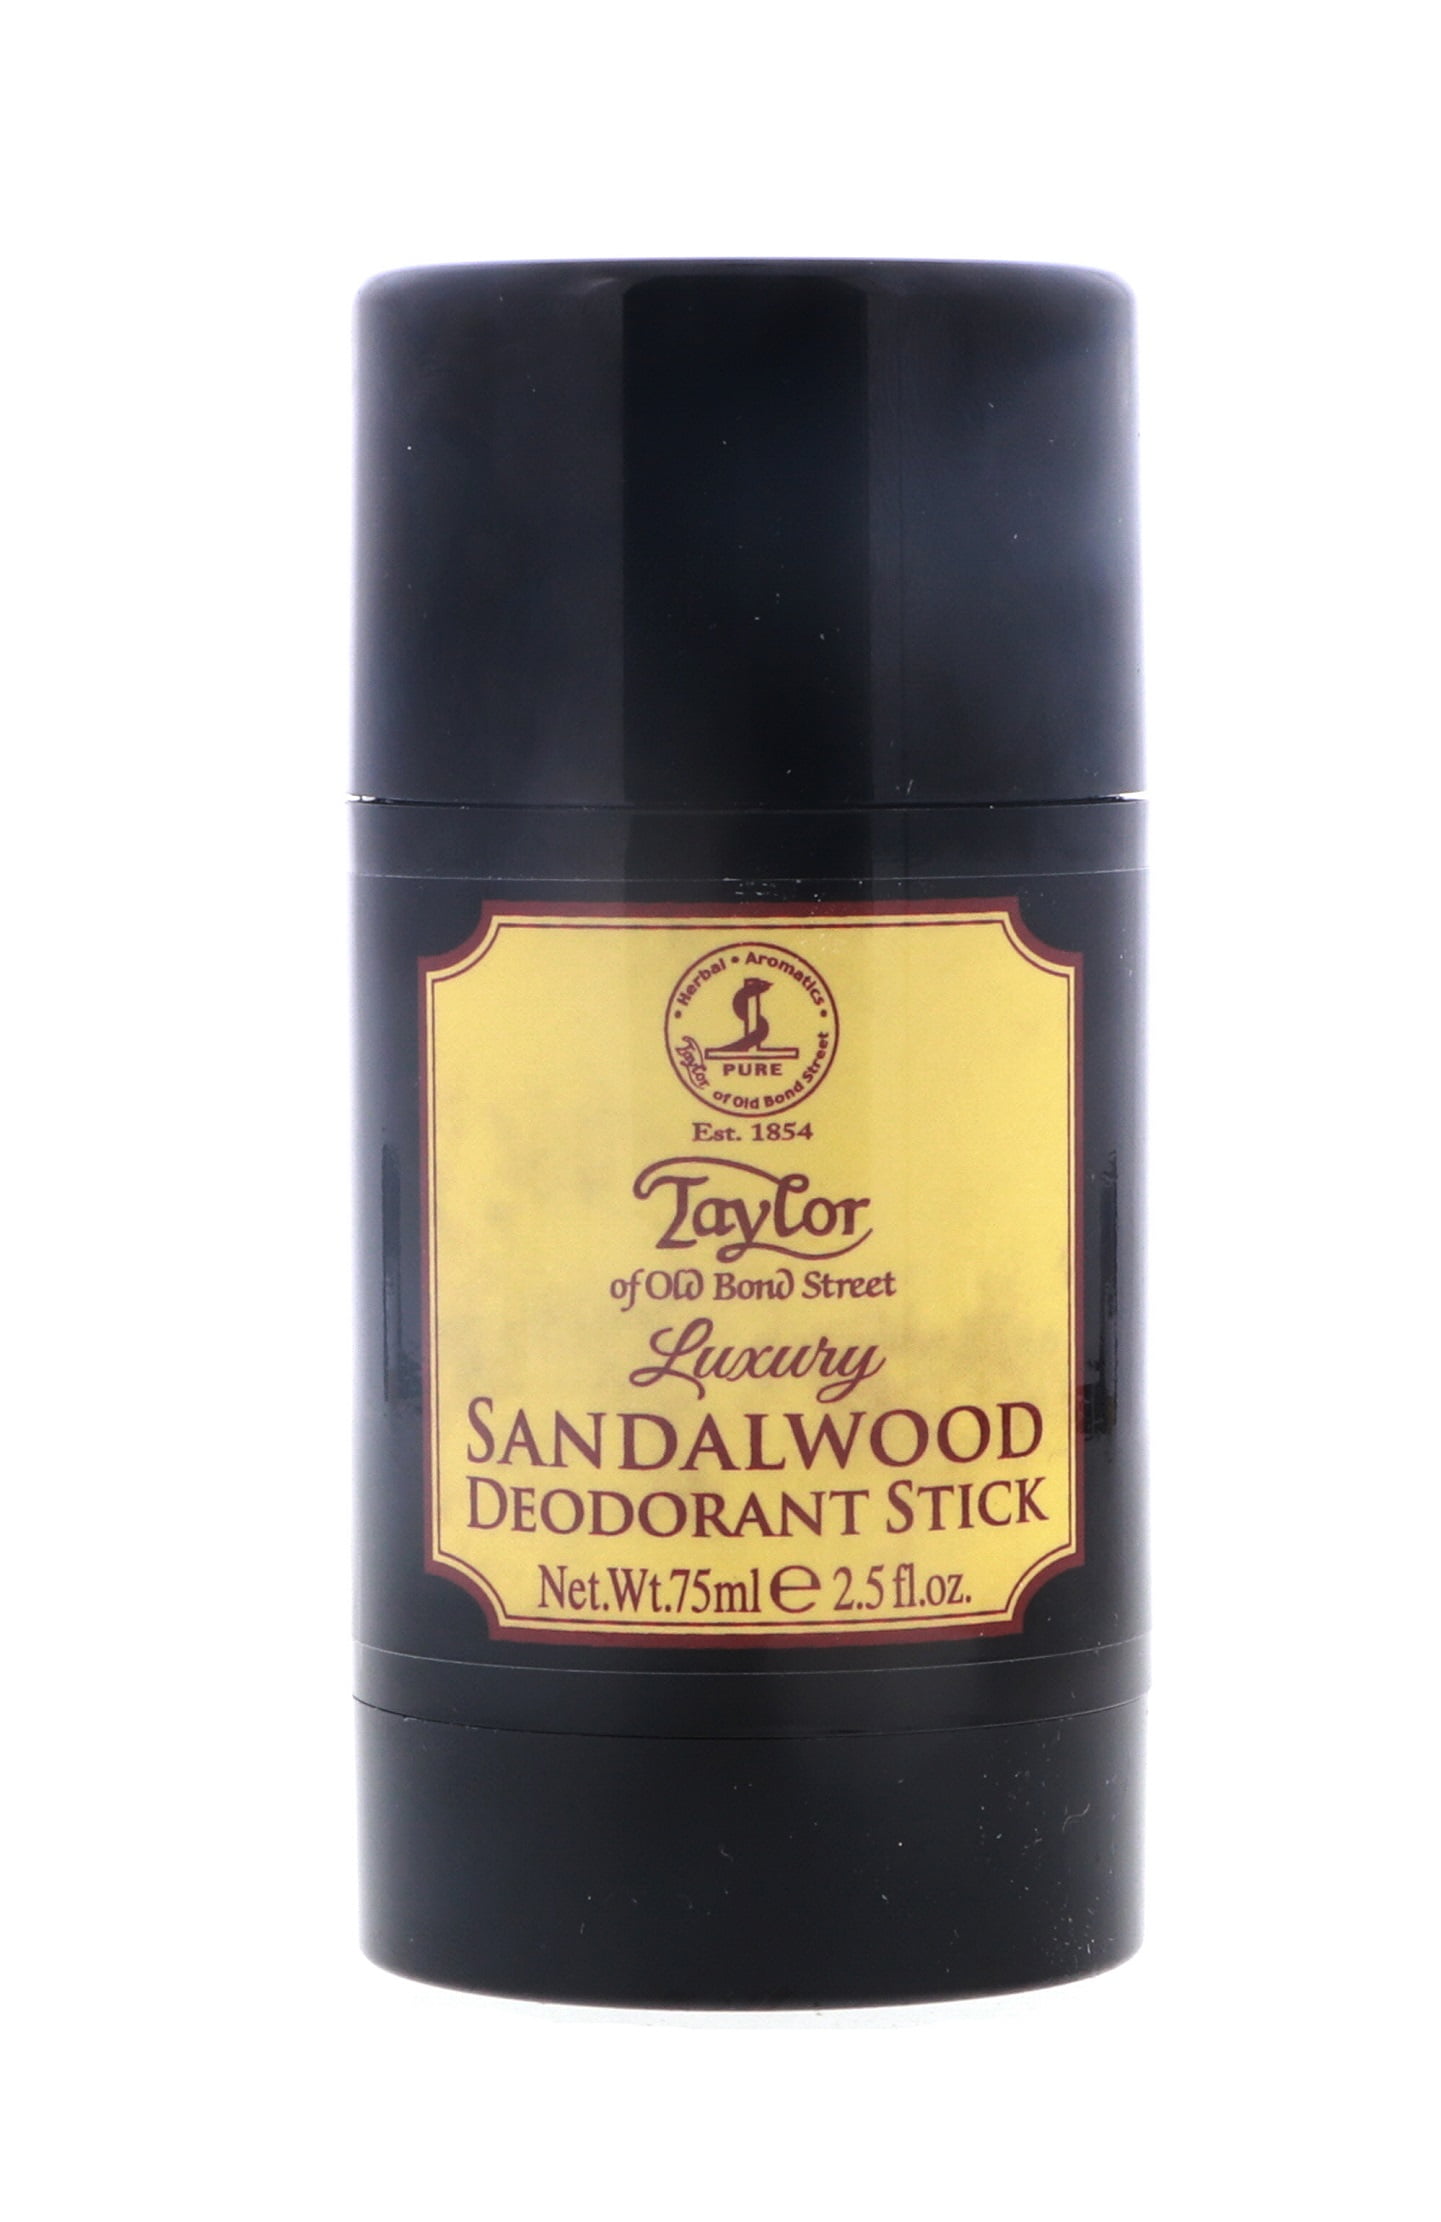 Taylor Deodorant Sandalwood Stick) Deo Stick of Old Street (2.5oz by Bond